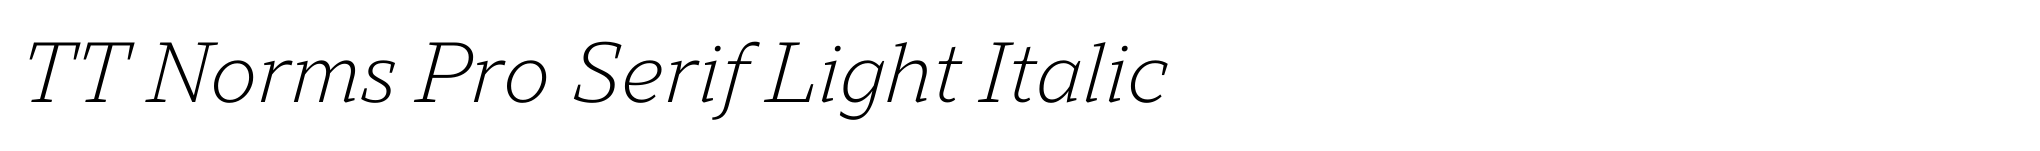 TT Norms Pro Serif Light Italic image